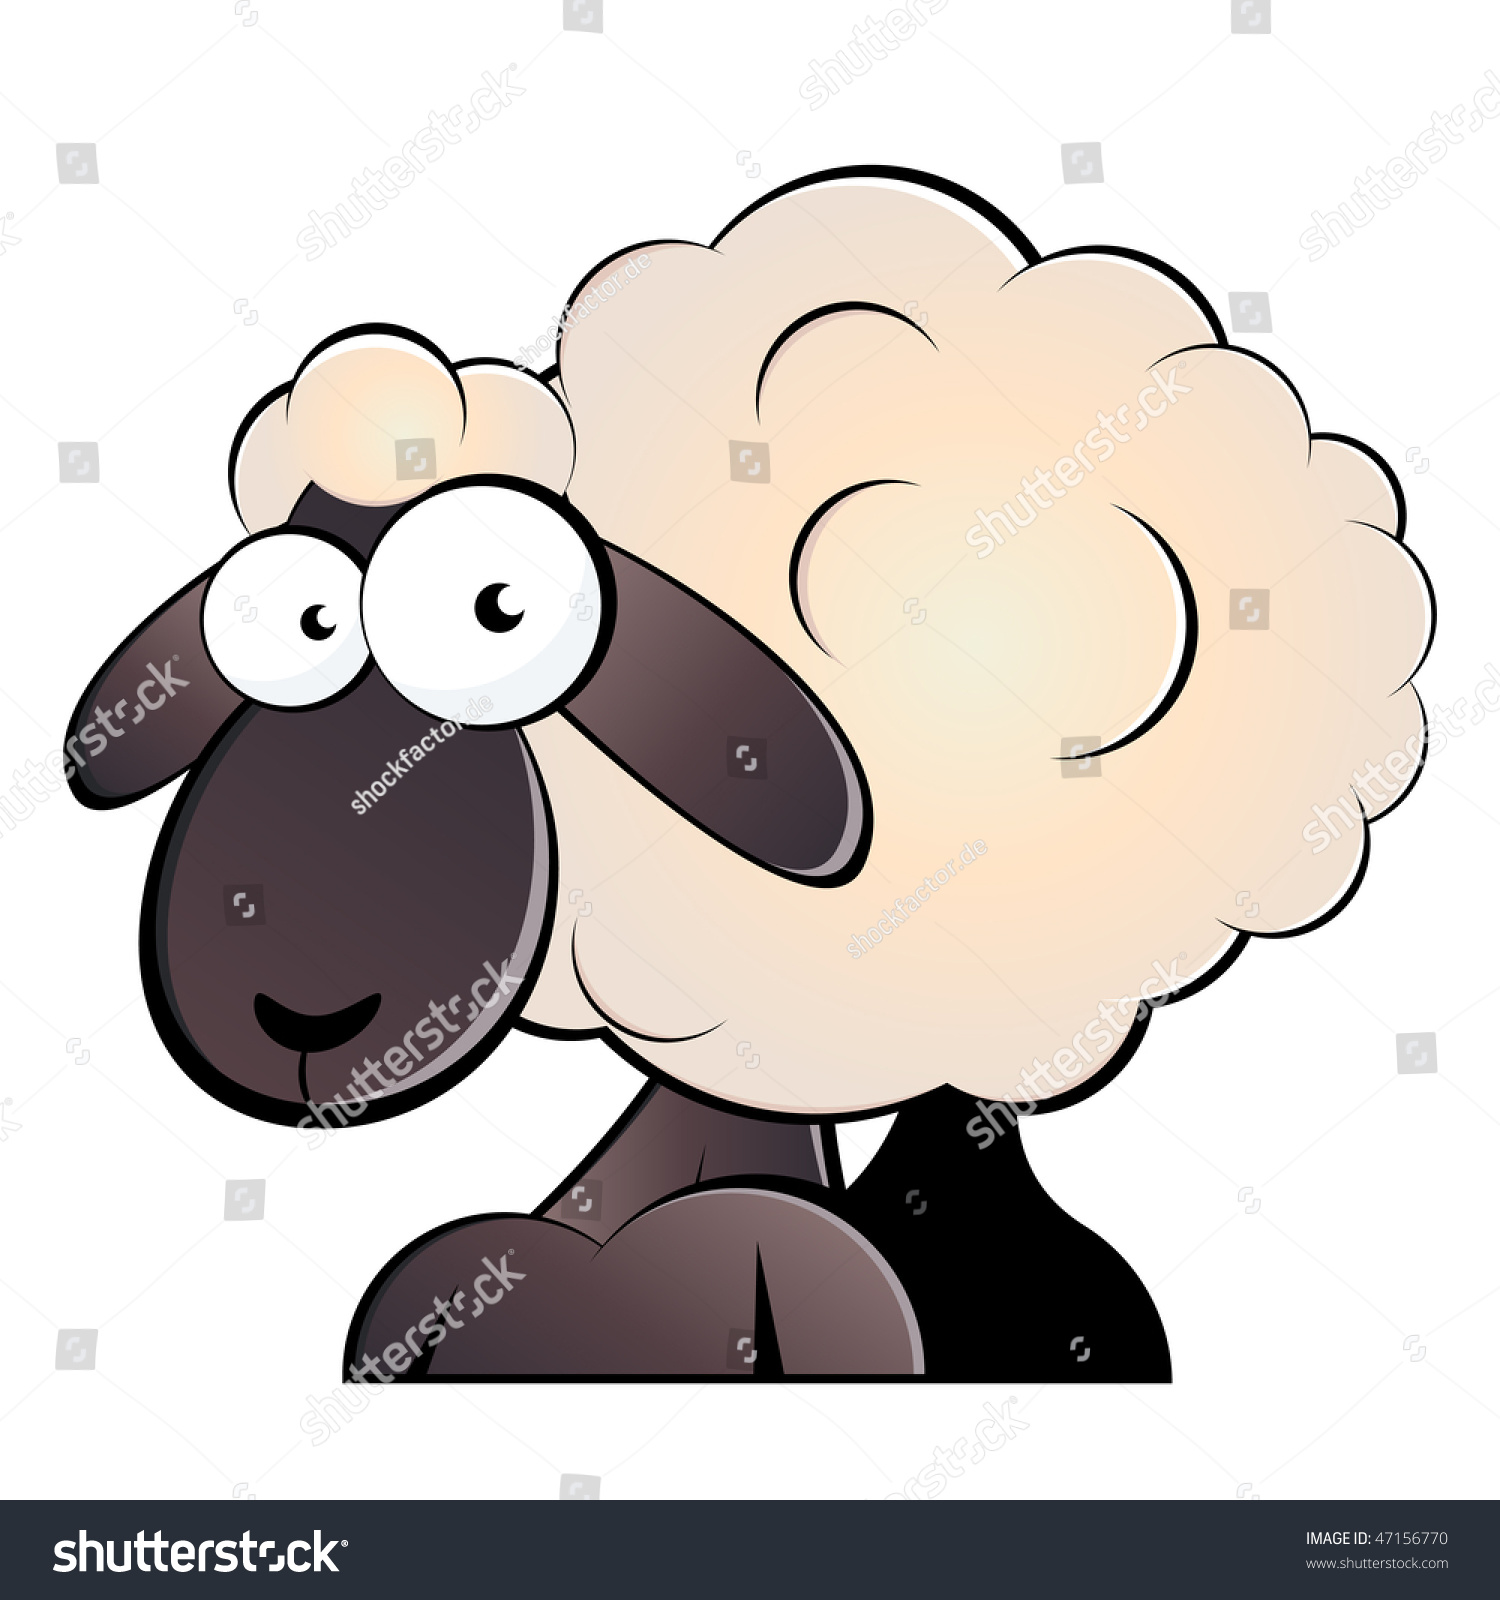 Funny Cartoon Sheep Stock Vector 47156770 : Shutterstock